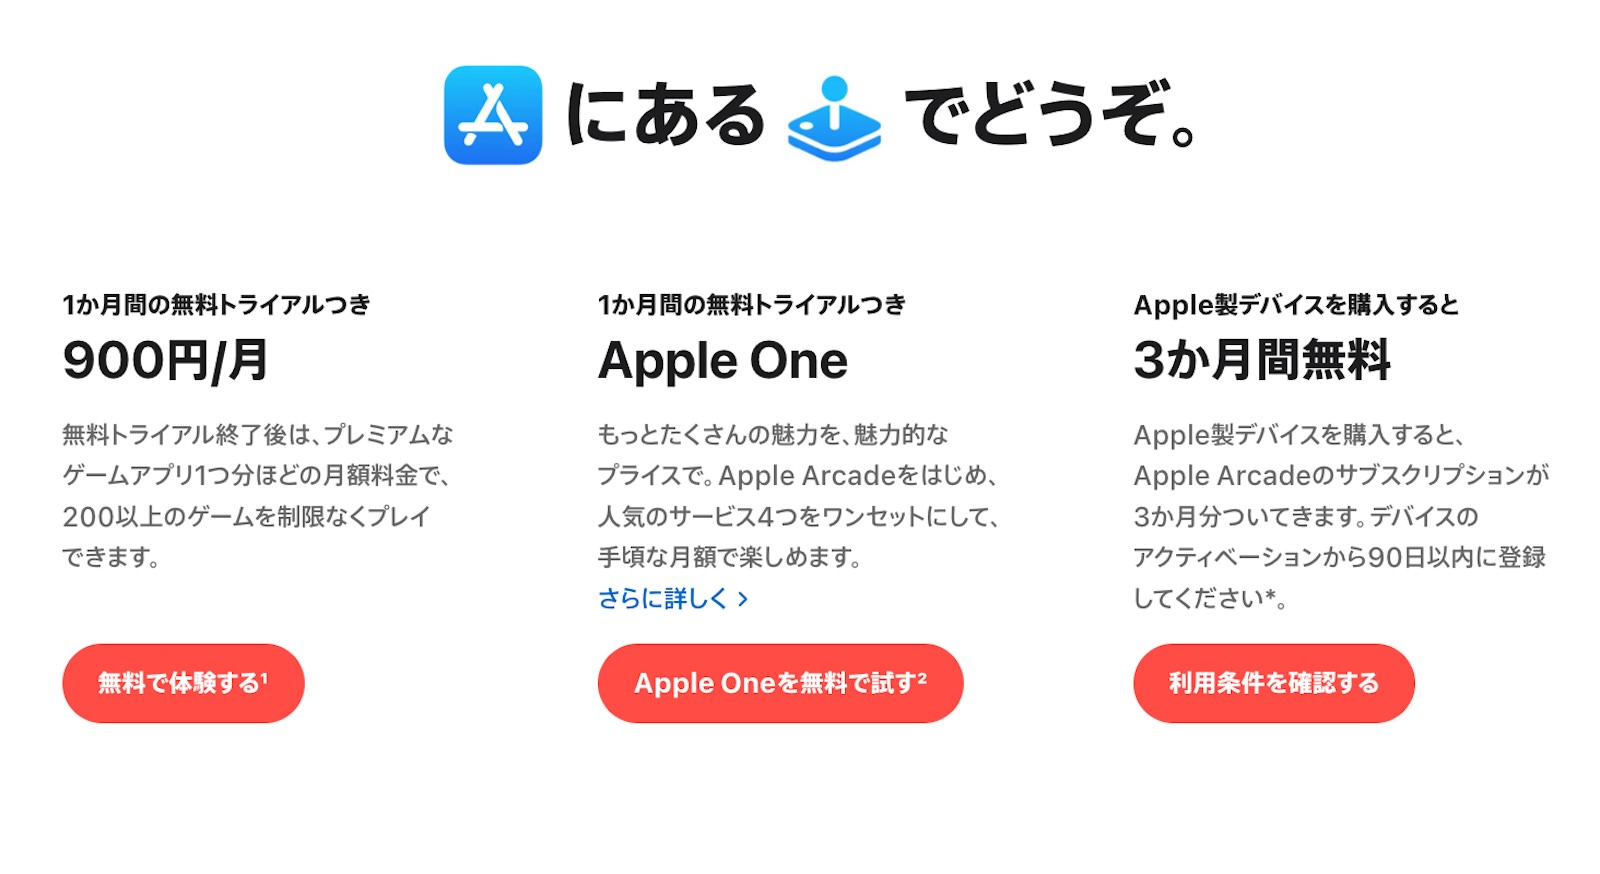 Apple Arcade price raise in japan 1